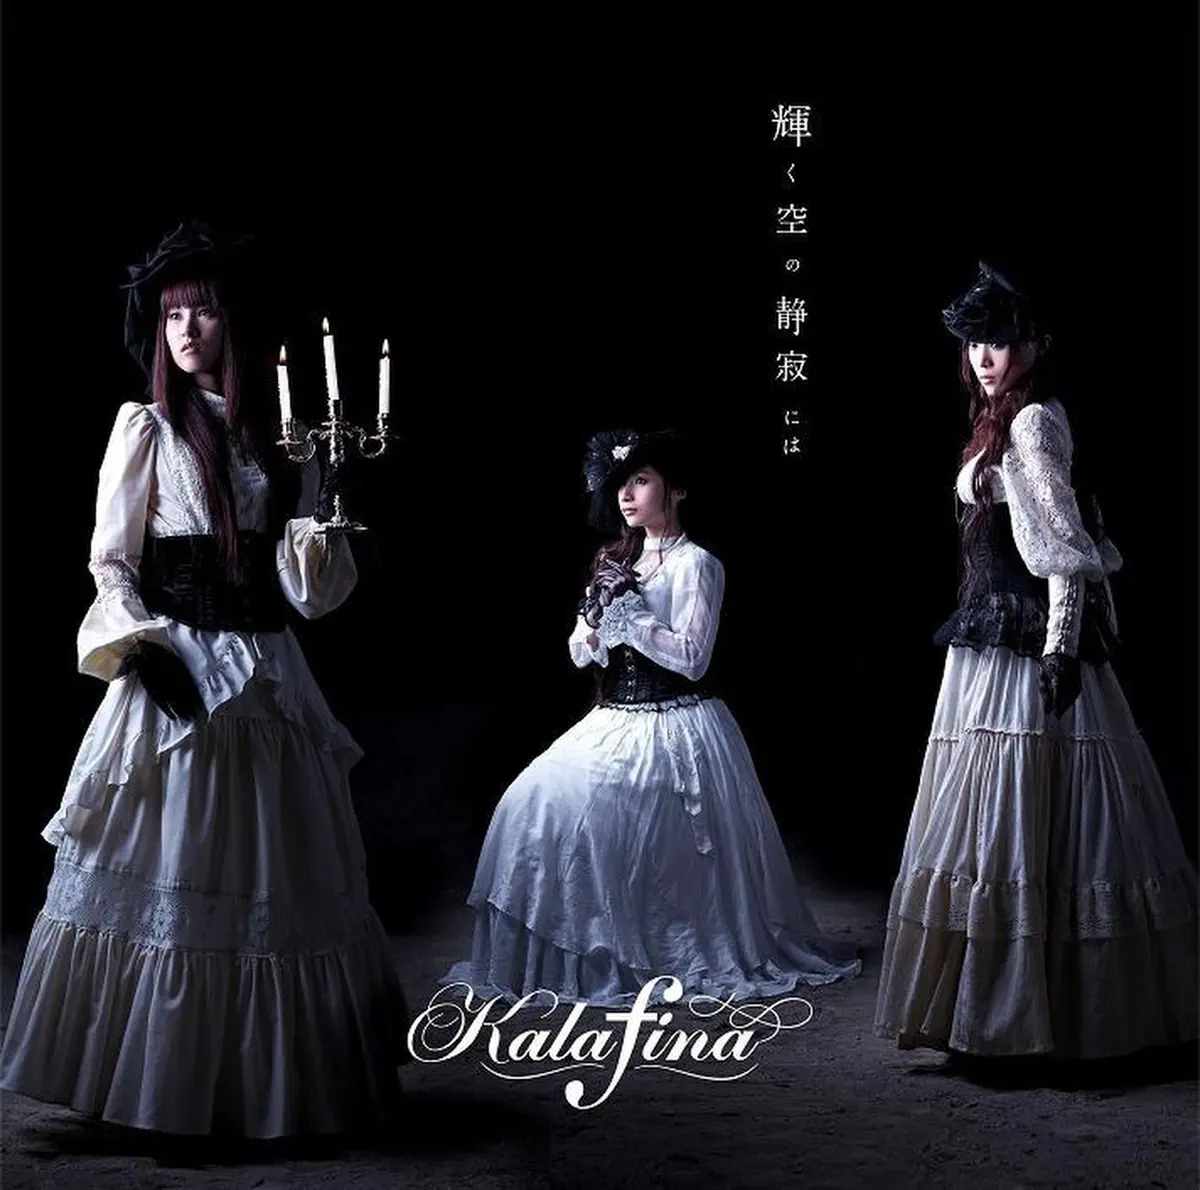 Kalafina - 輝く空の静寂には - Single (2010) [iTunes Plus AAC M4A]-新房子